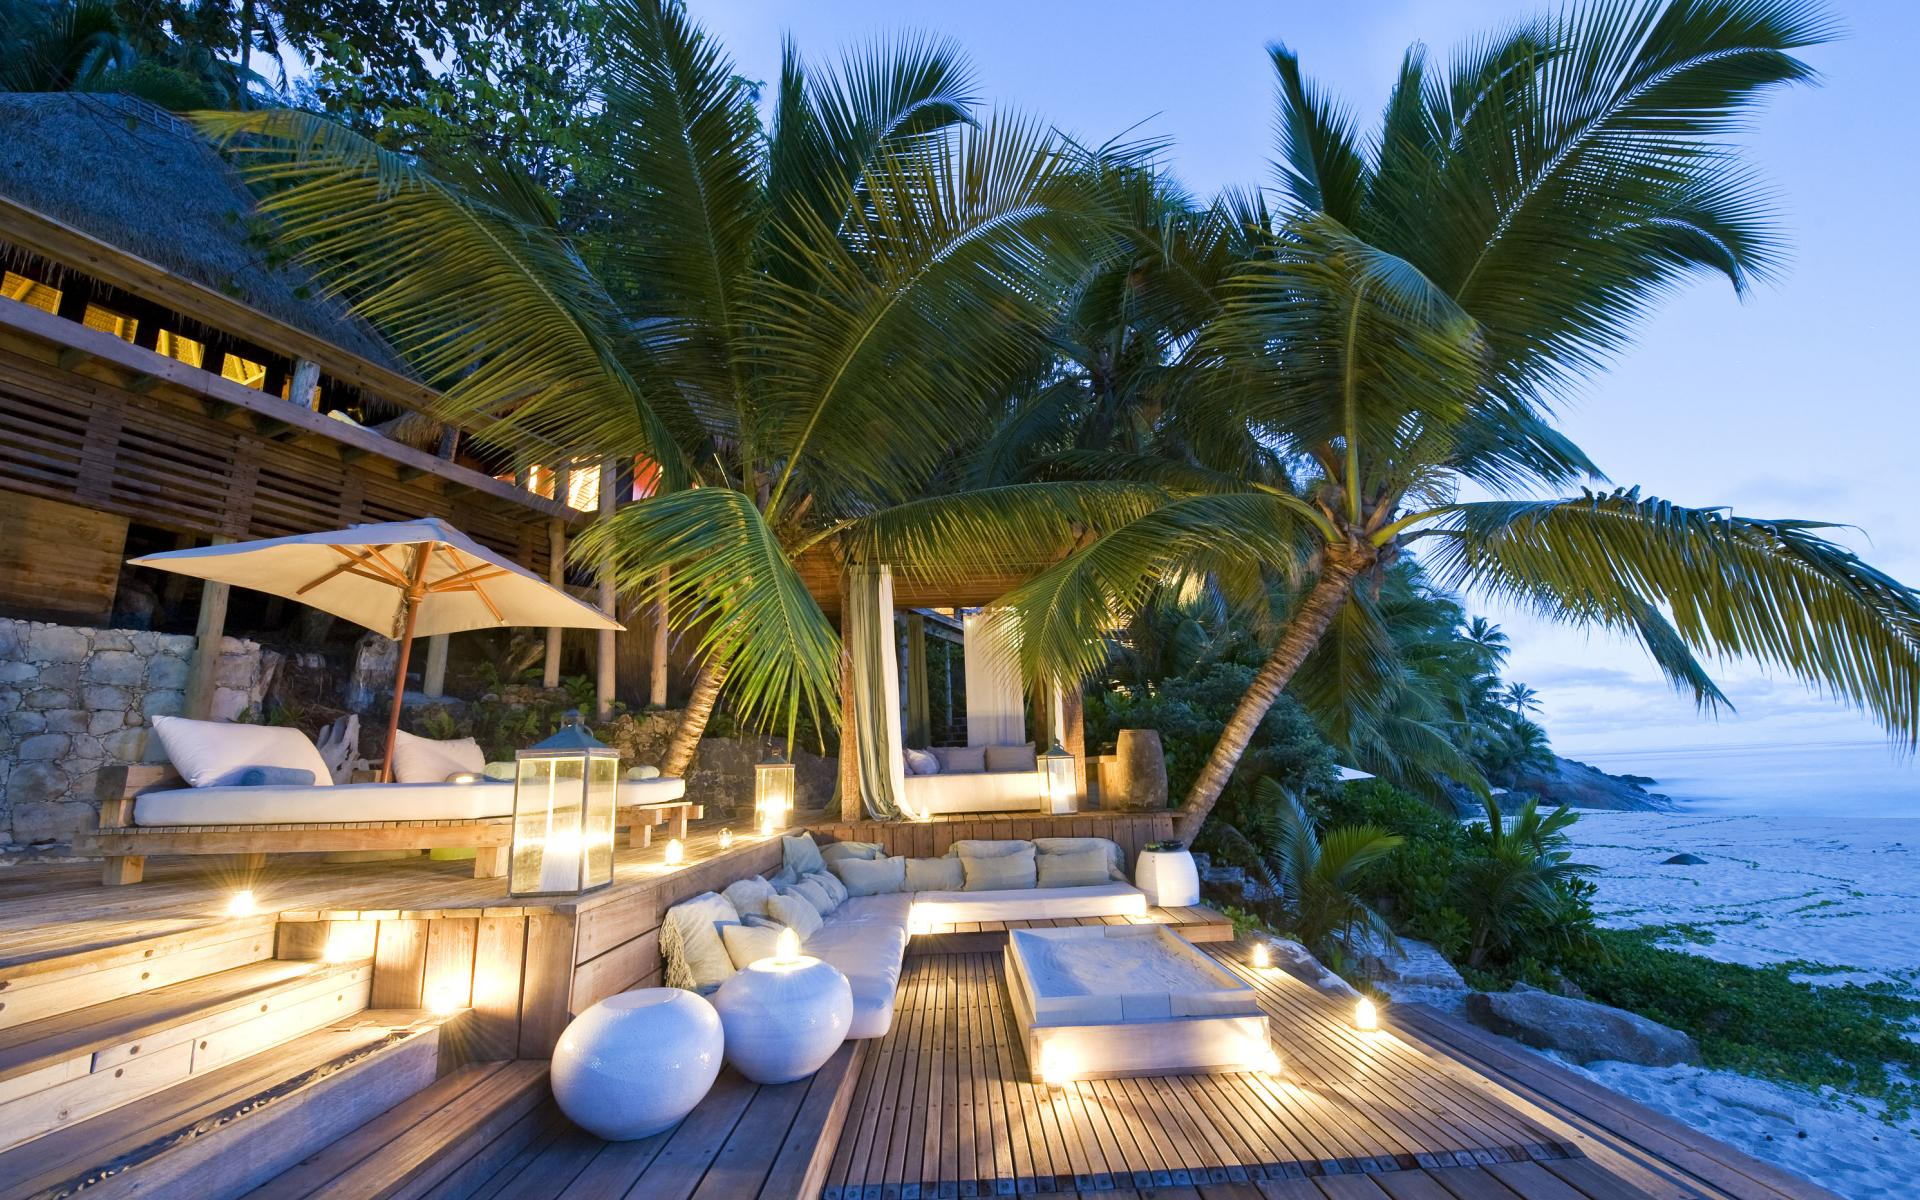 1920x1200 Villa North Island in Seychelles CAANdesign | Architecture and home design blog